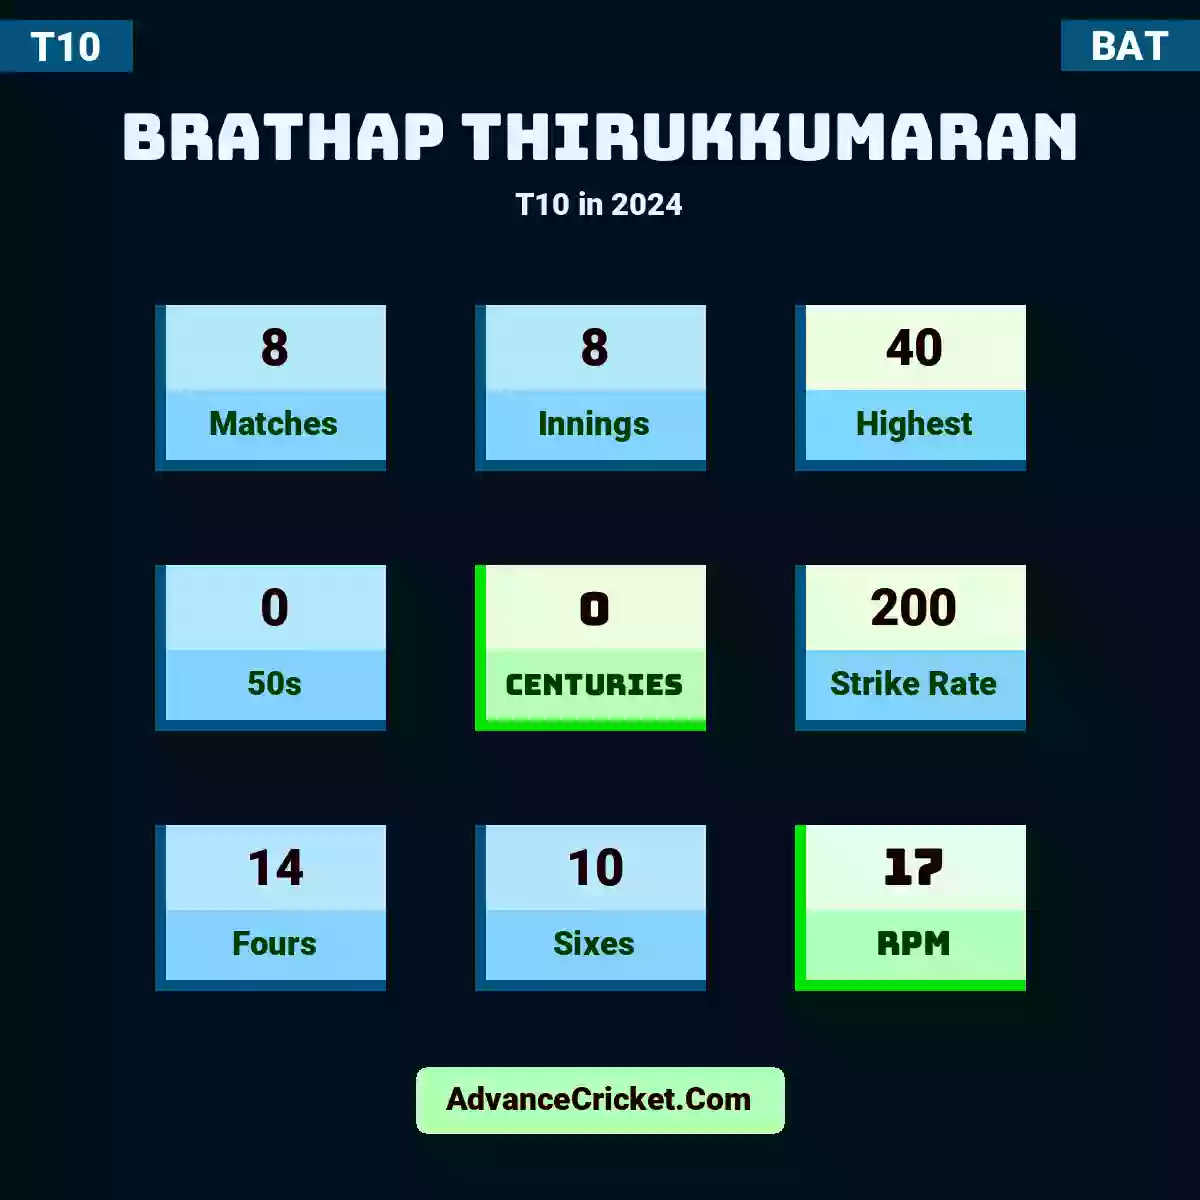 Brathap Thirukkumaran T10  in 2024, Brathap Thirukkumaran played 8 matches, scored 40 runs as highest, 0 half-centuries, and 0 centuries, with a strike rate of 200. B.Thirukkumaran hit 14 fours and 10 sixes, with an RPM of 17.